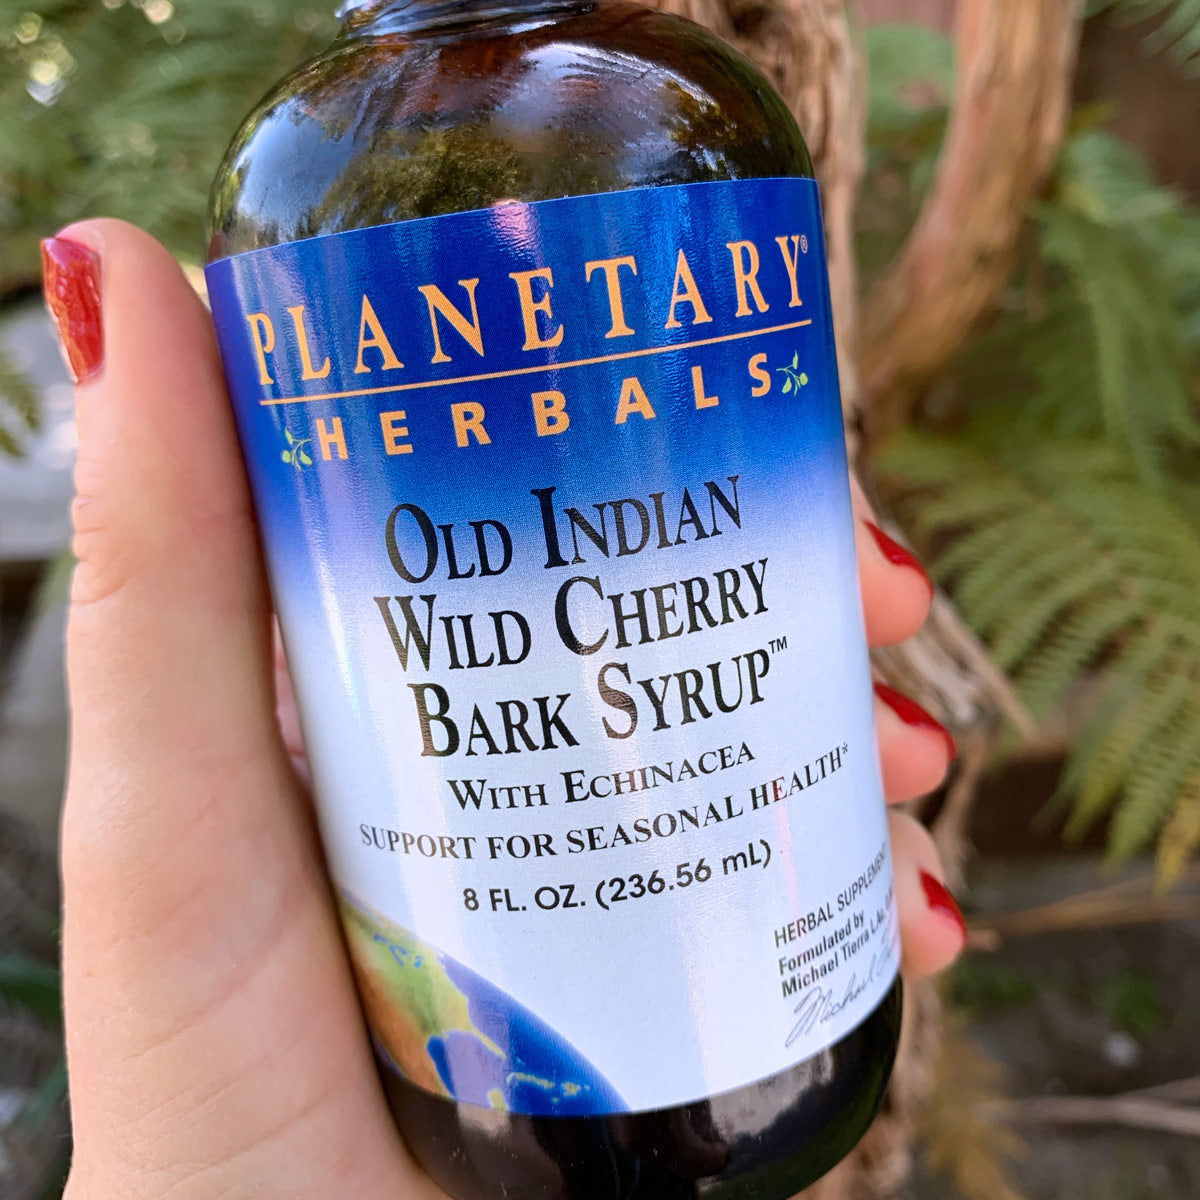 Dr. Tierra's Wild Cherry Bark Syrup